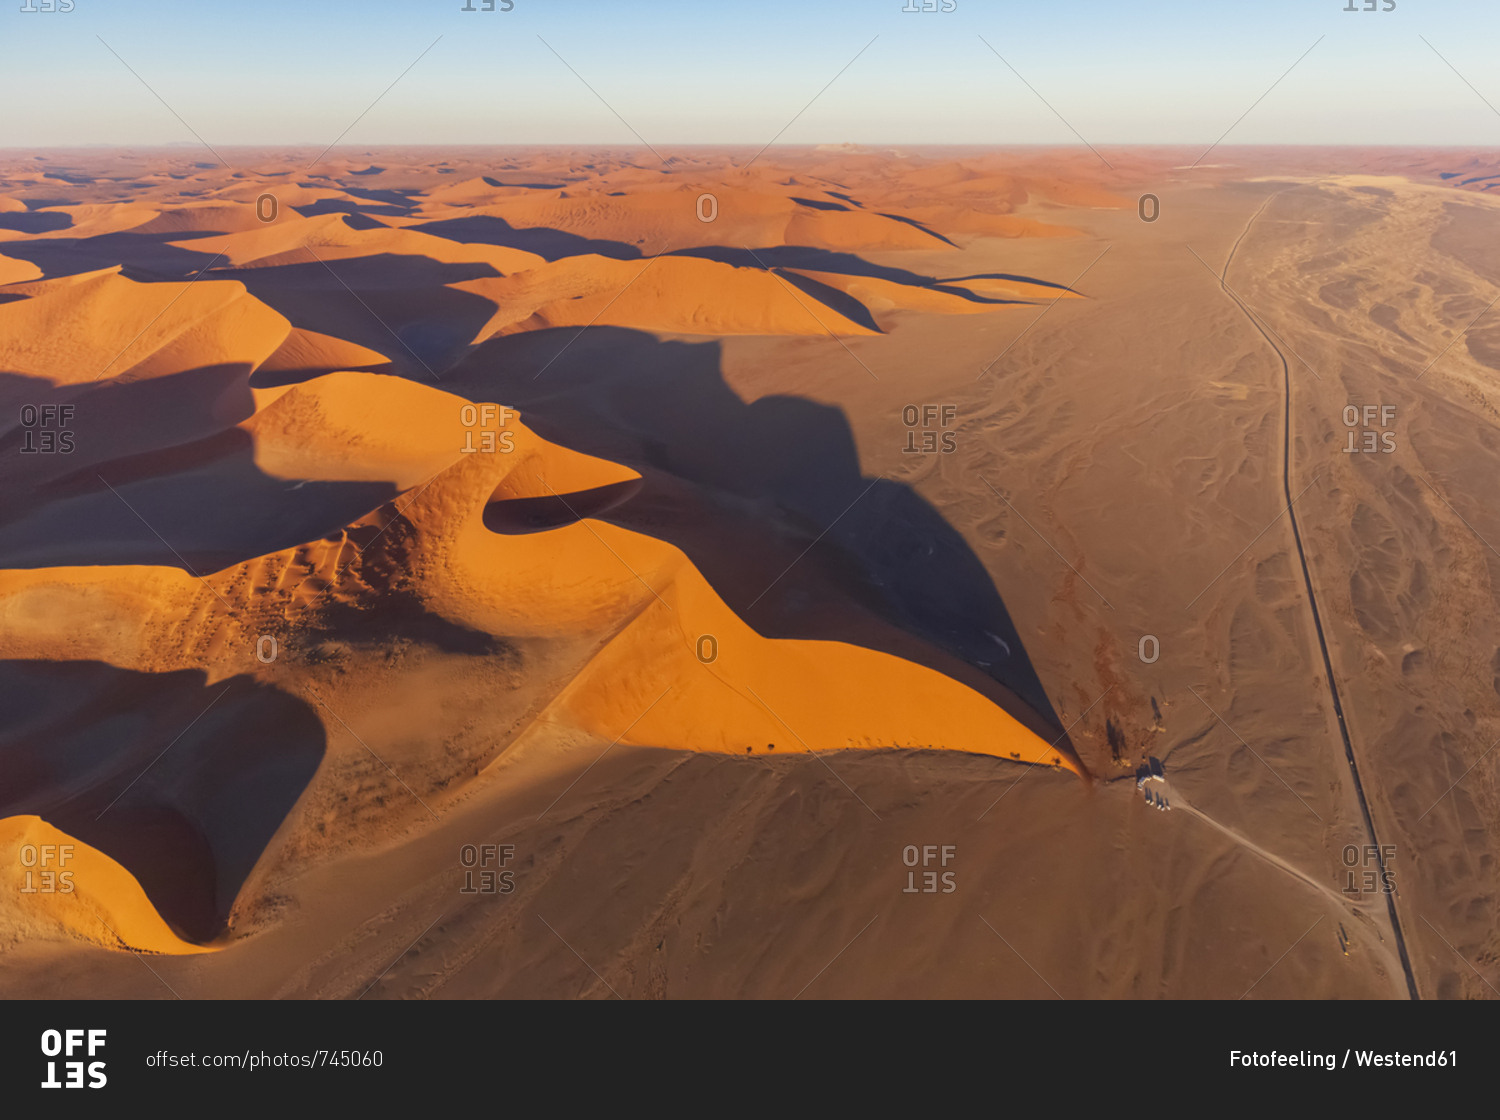 Africa- Namibia- Namib desert- Namib-Naukluft National Park- Aerial view of desert dune 45